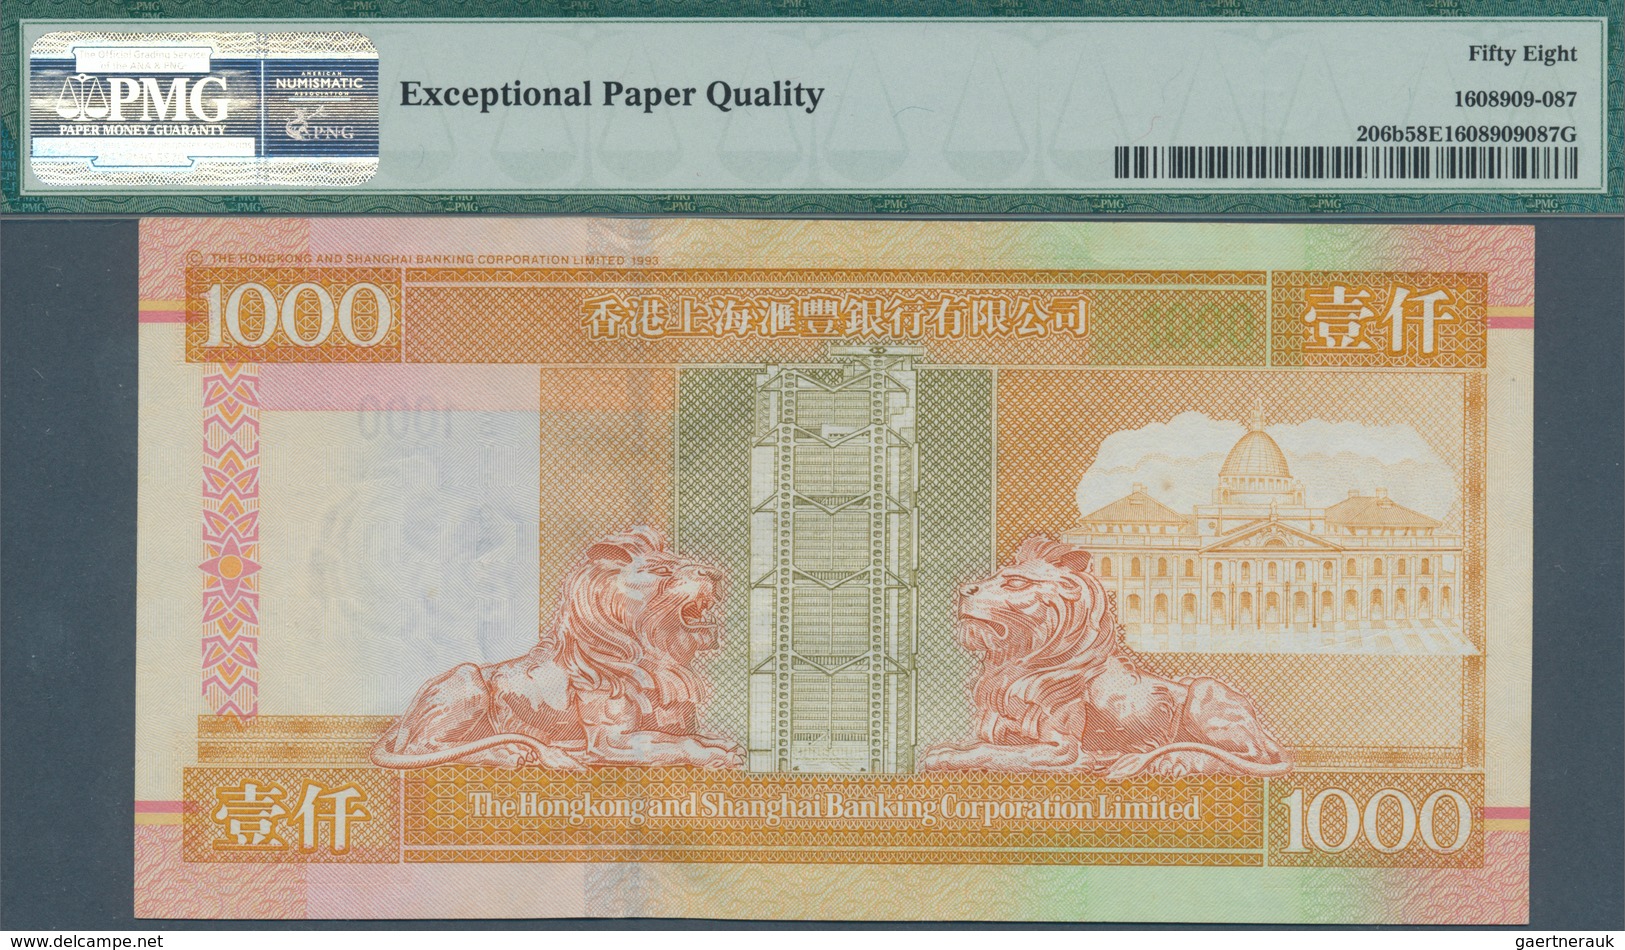 01681 Hong Kong: 1000 Dollars 2002 P. 206b In Condition: PMG Graded 58 Choice AUNC EPQ. - Hong Kong